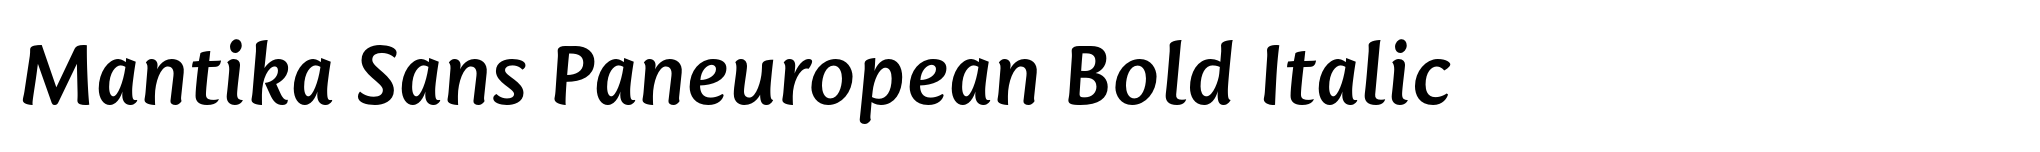 Mantika Sans Paneuropean Bold Italic image